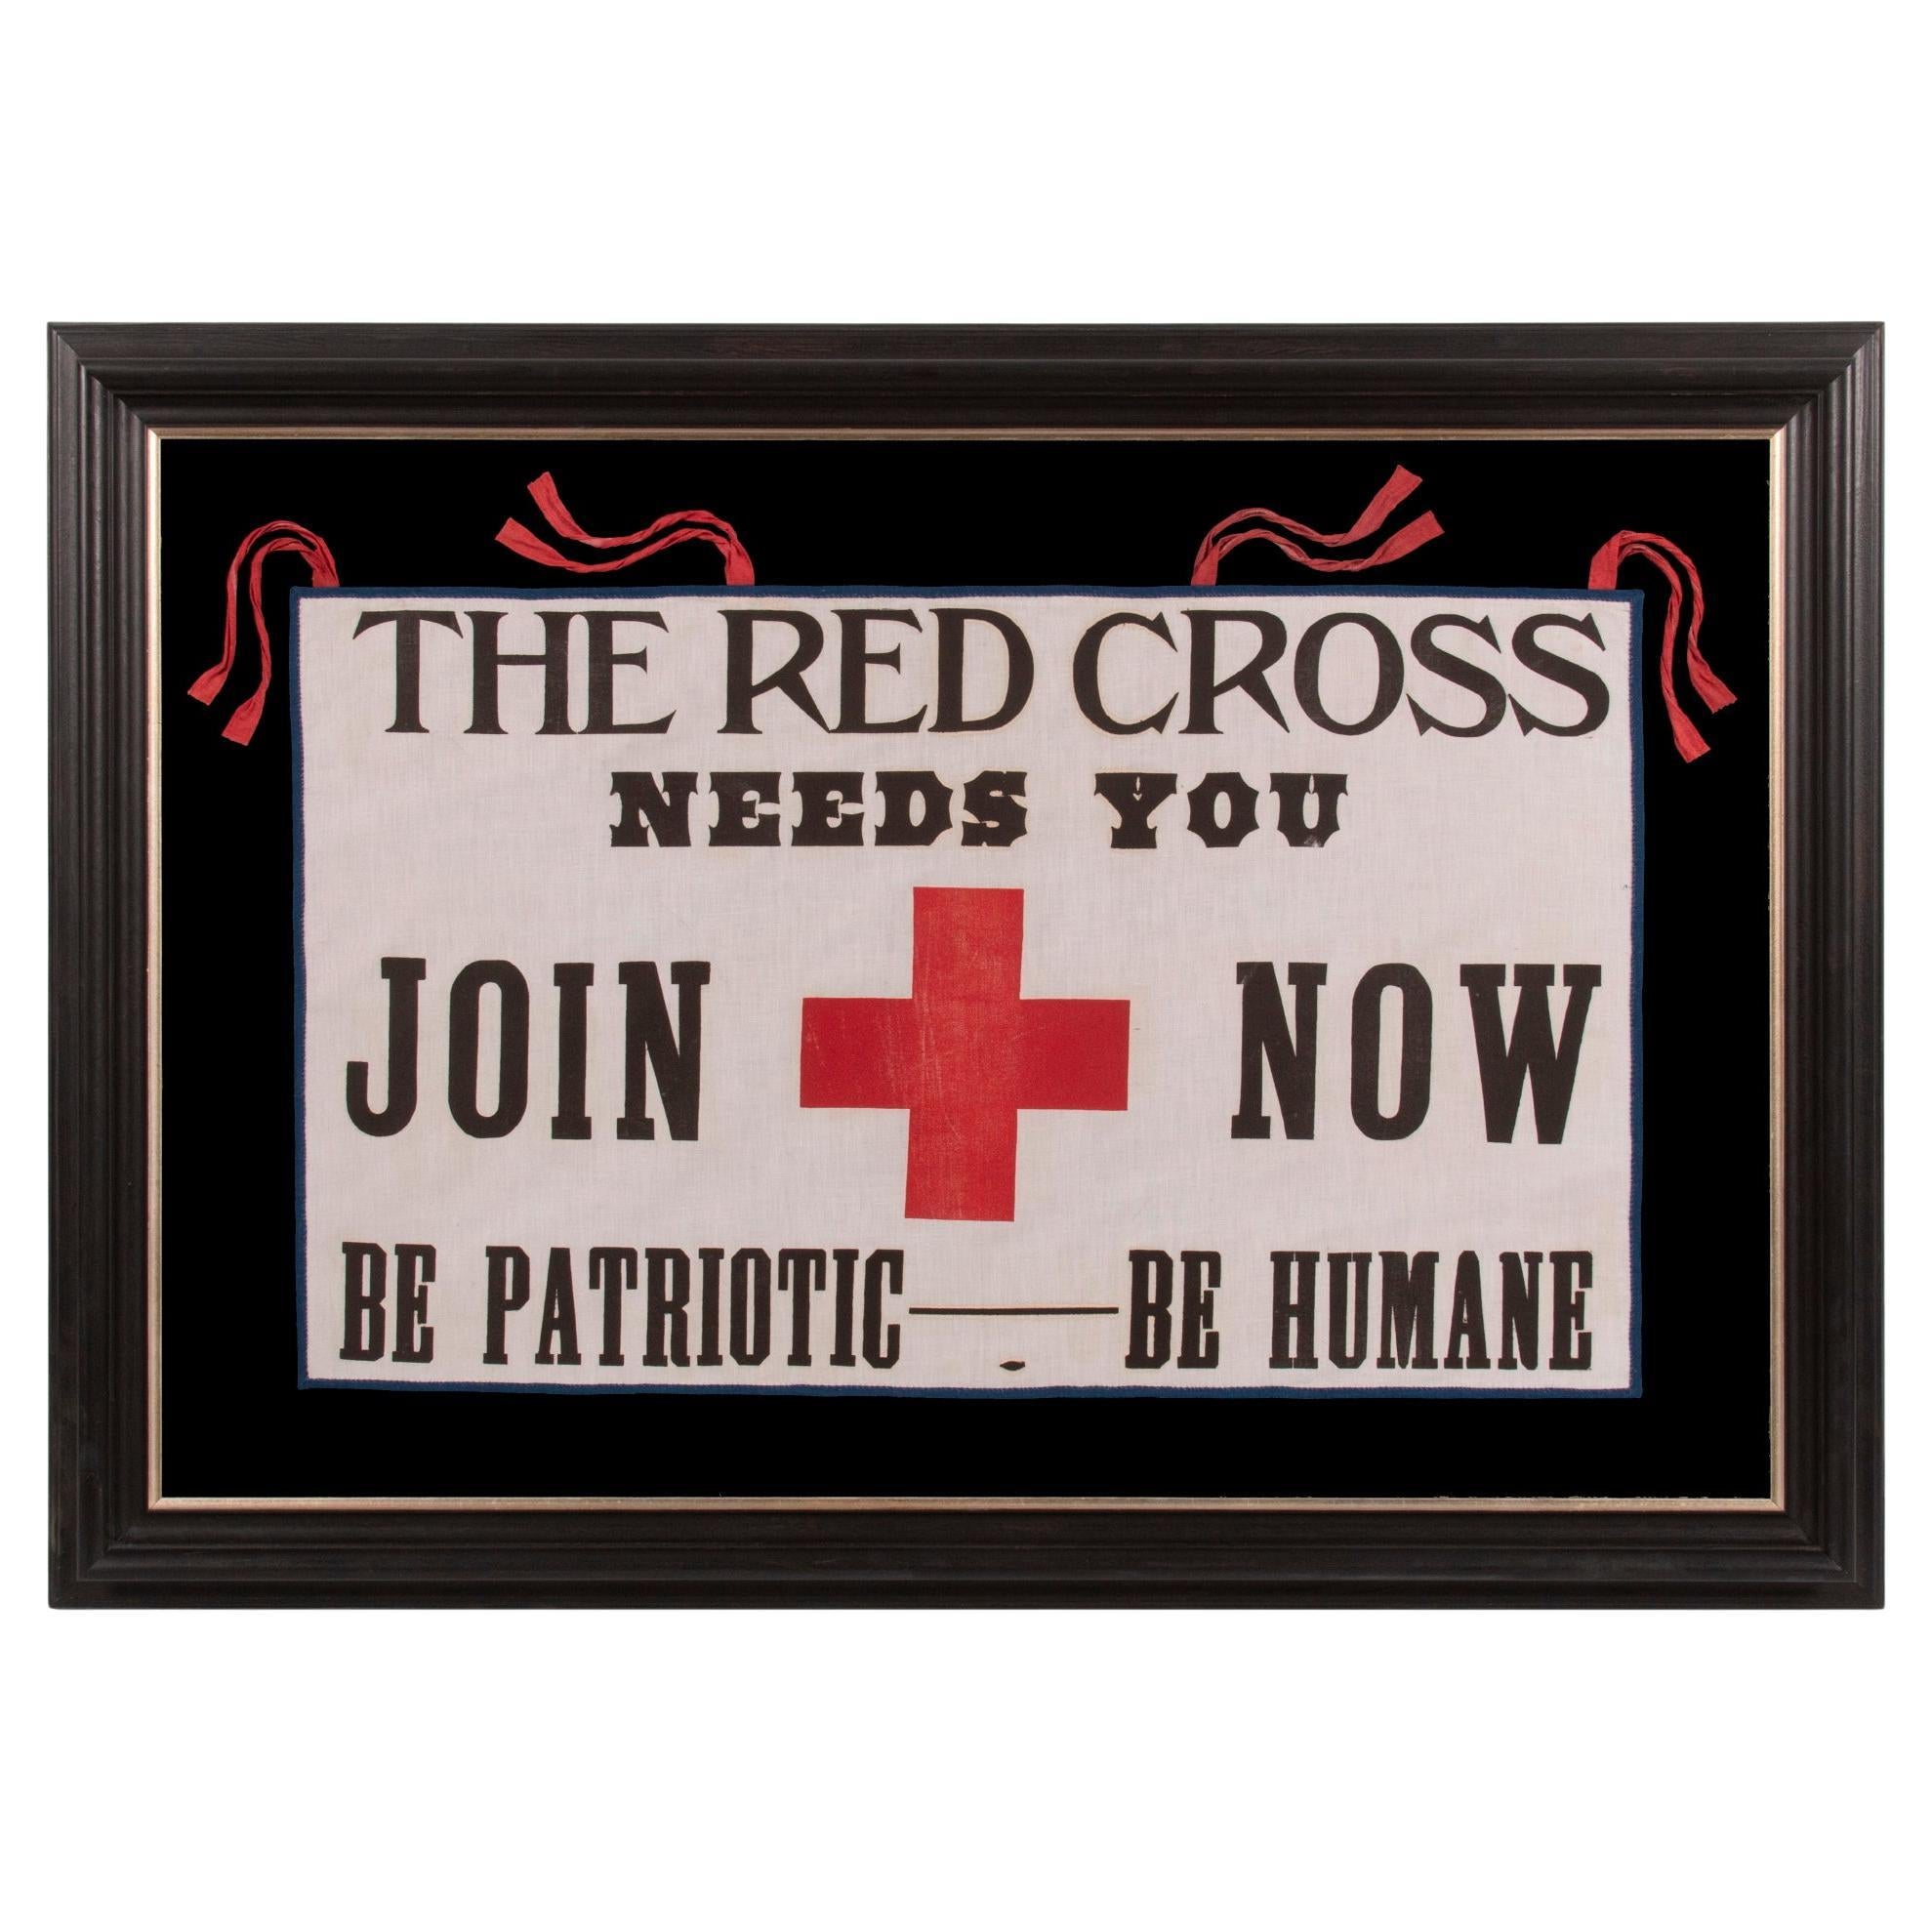 Banner des Roten Kreuzes mit skurriler Beschriftung, ca. 1917 - 1918